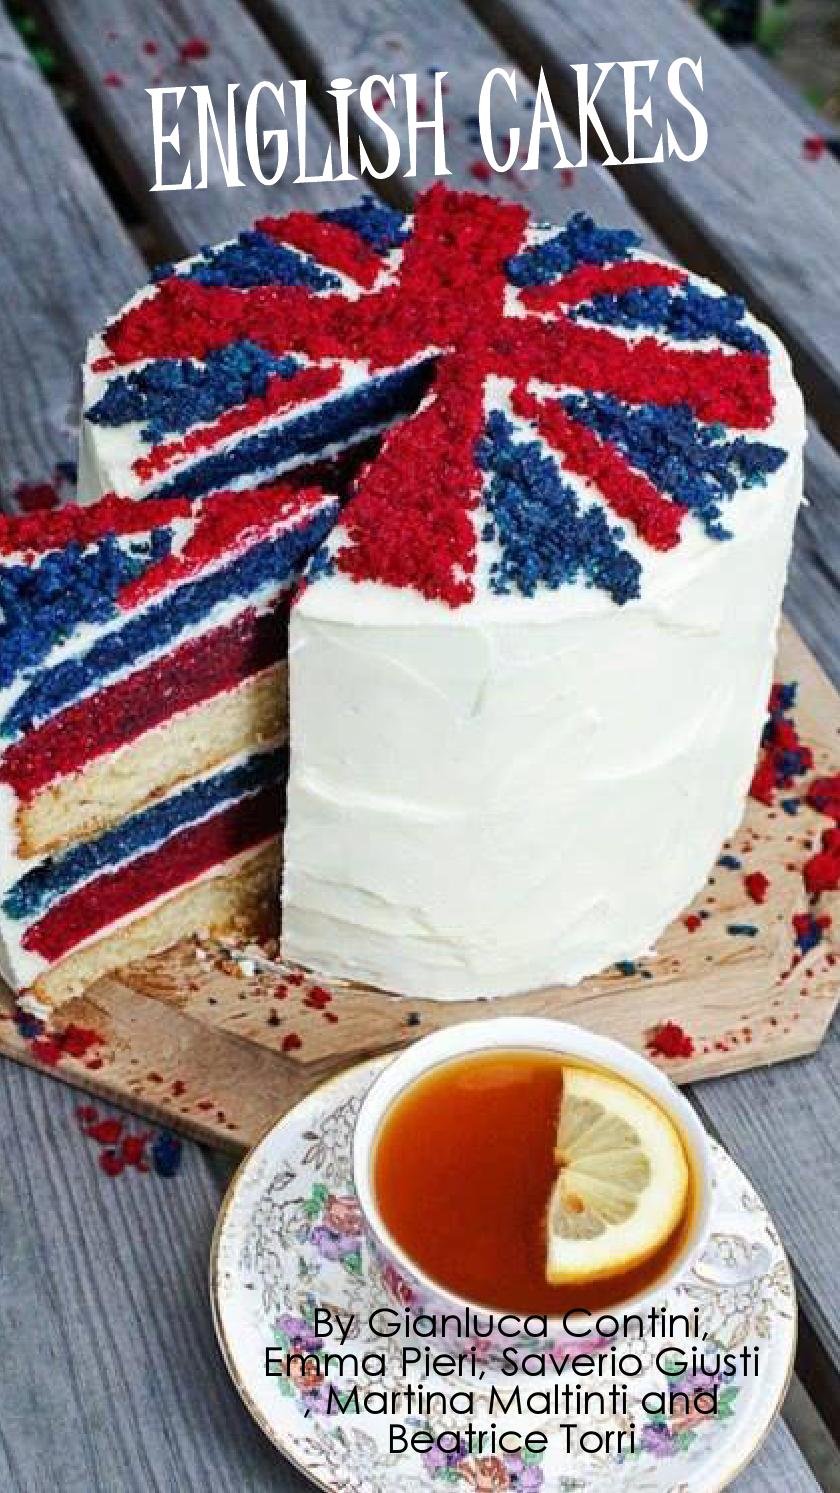 Торт на английском. Торт в английском стиле. Торт в стиле Великобритания. Торт с британским флагом.